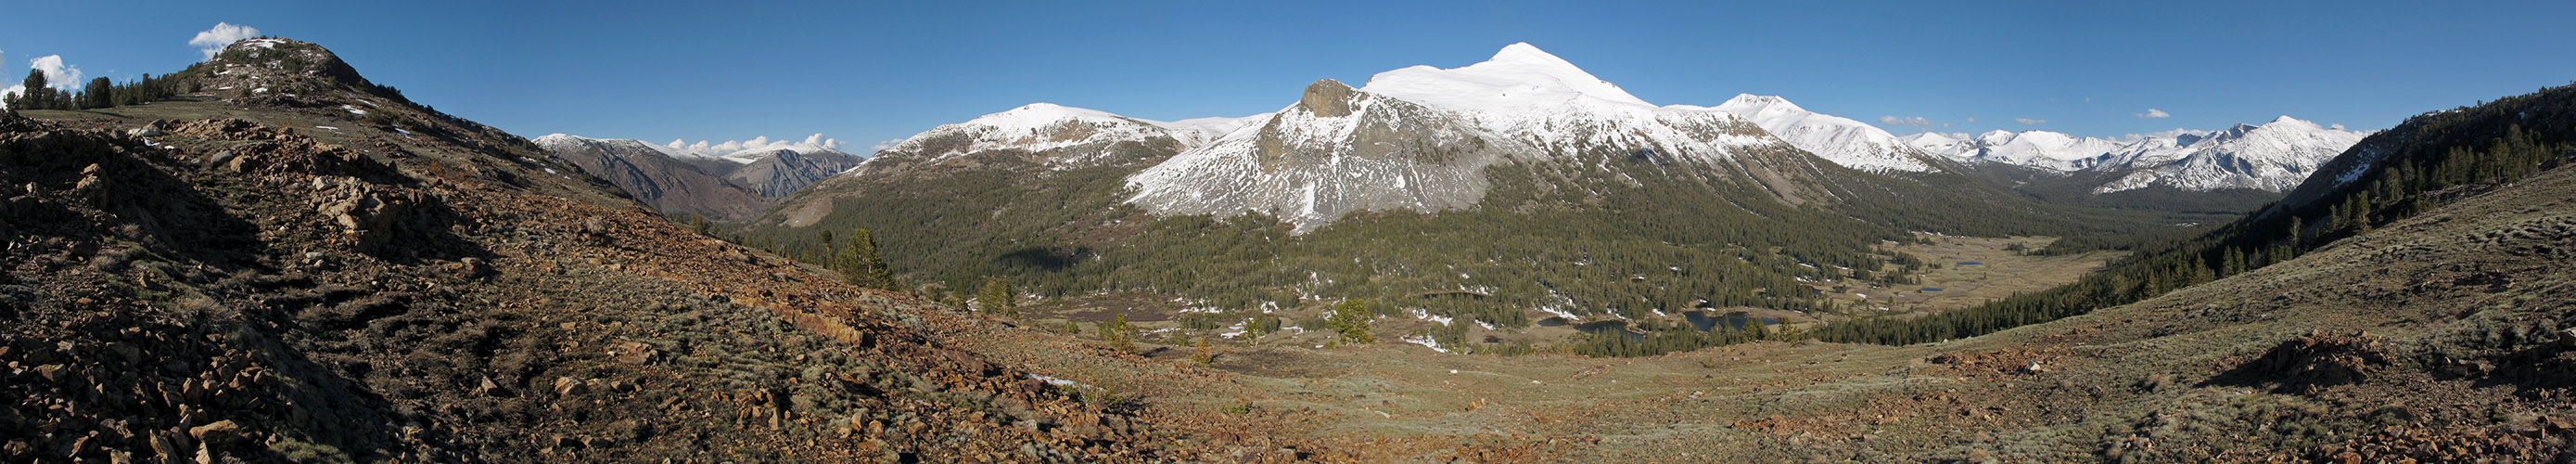 Gaylor Ridge panorama [Gaylor Lake Trail, Yosemite National Park, Tuolumne County, California]